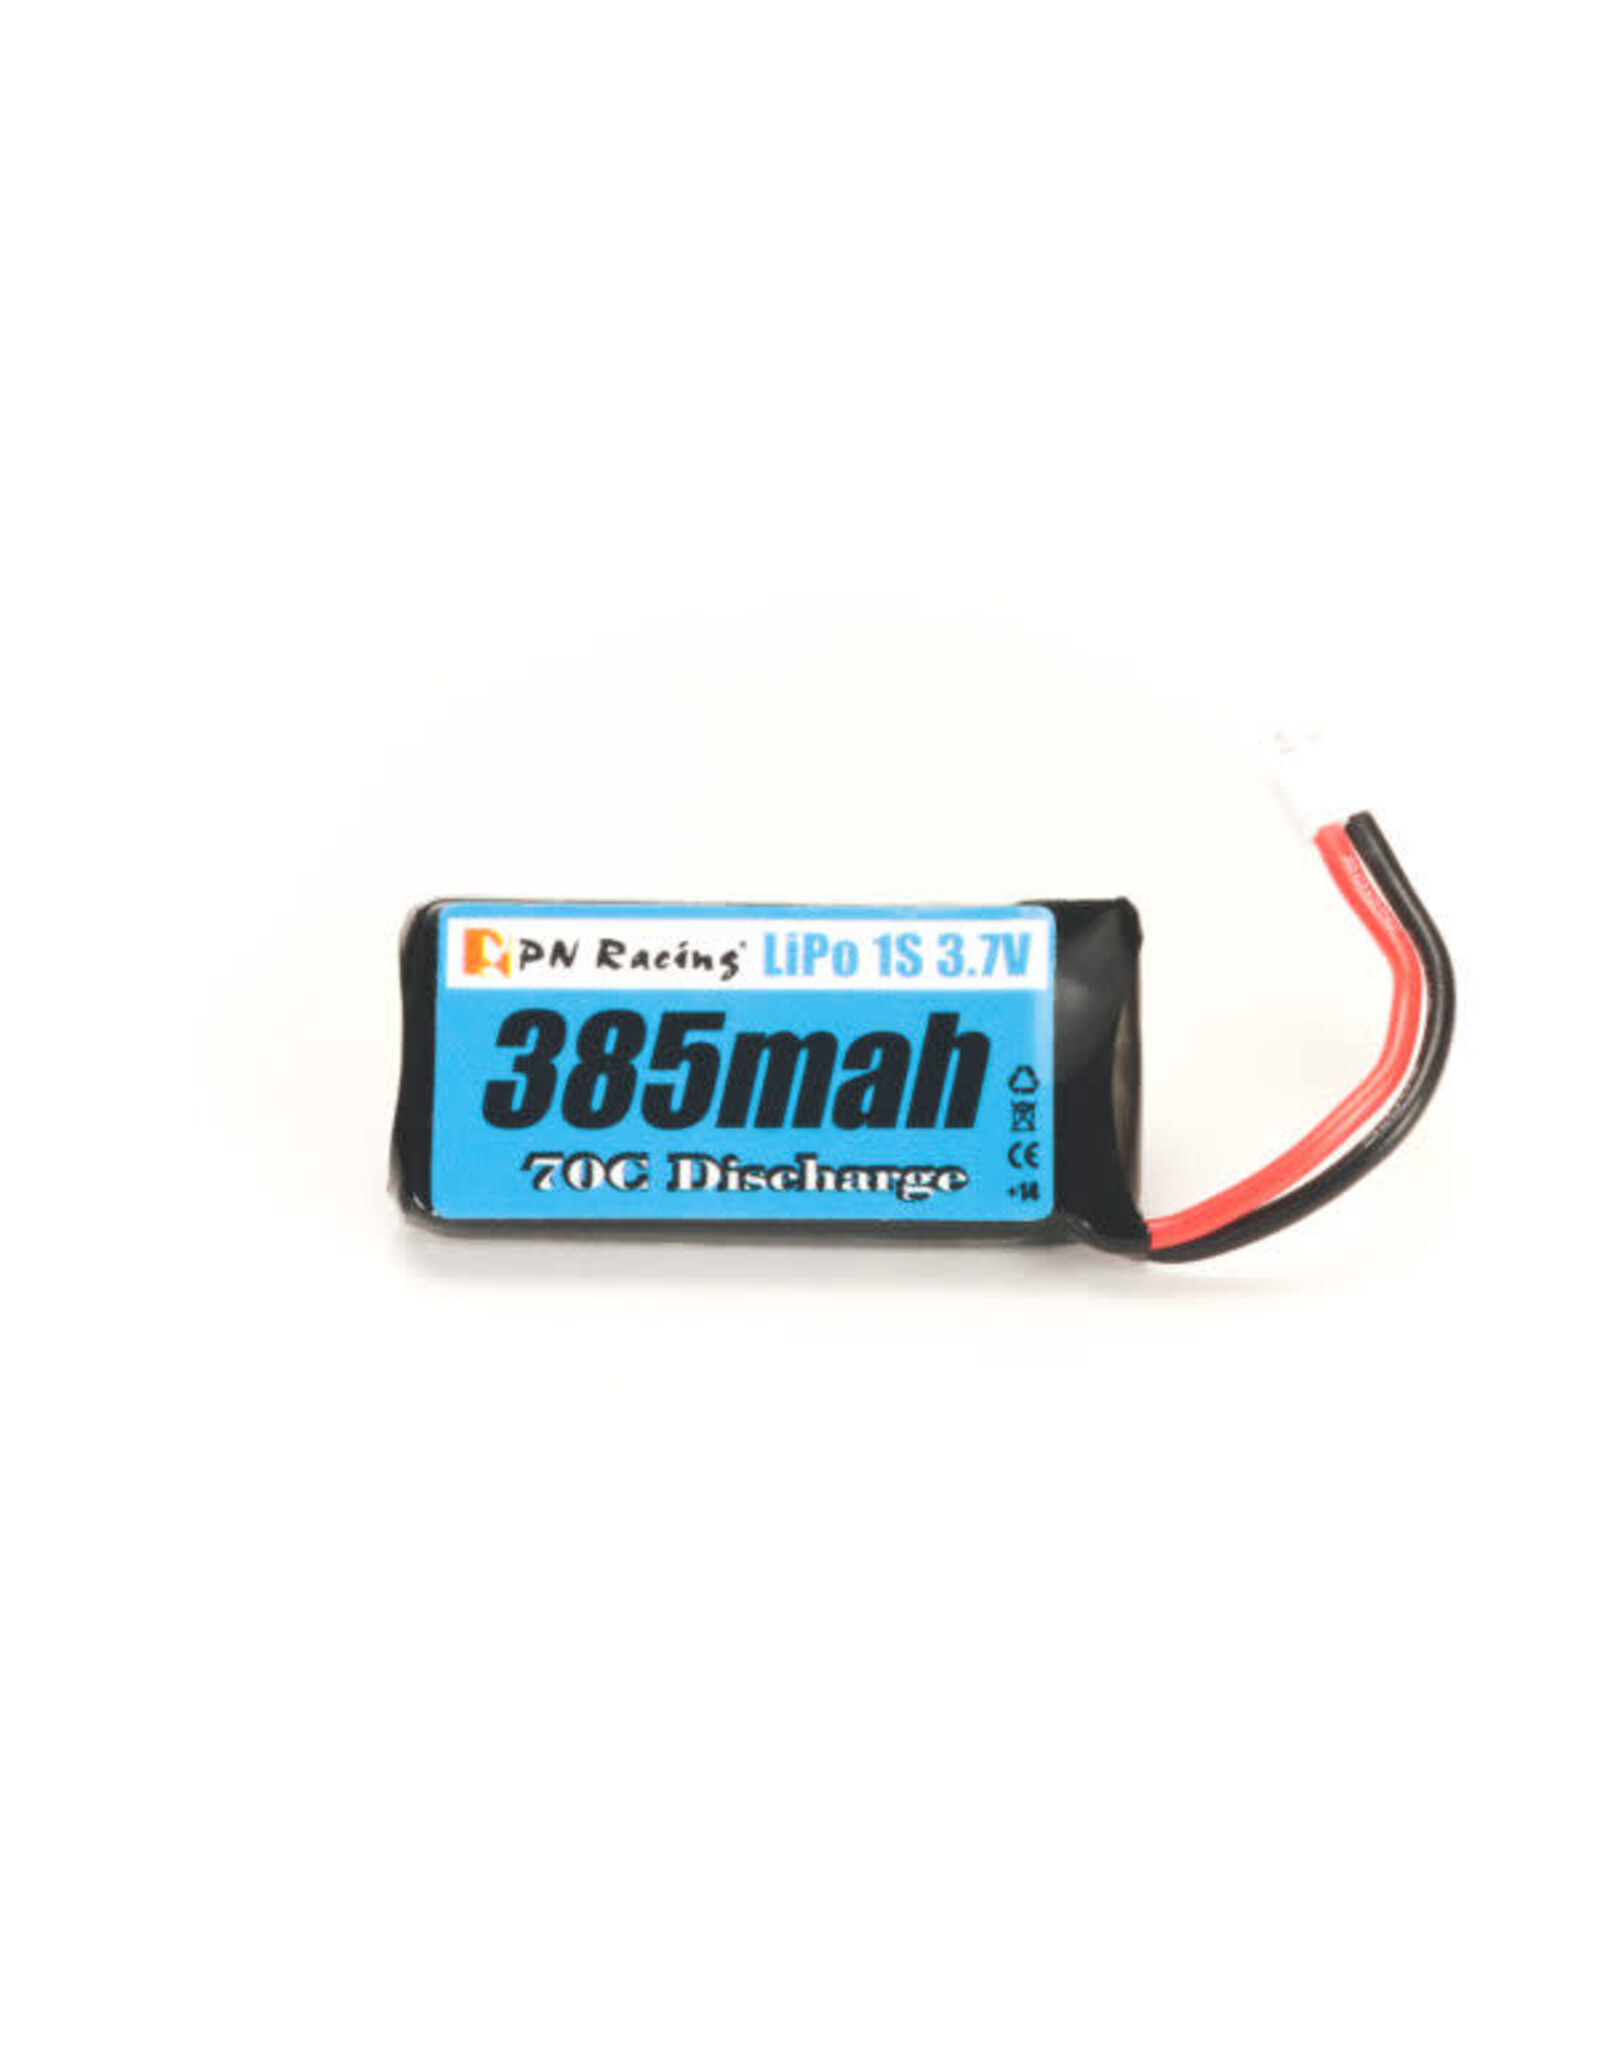 PN Racing PN Racing 700385 70C Discharge LiPo MOLEX Female Plug 385mah 2S Battery